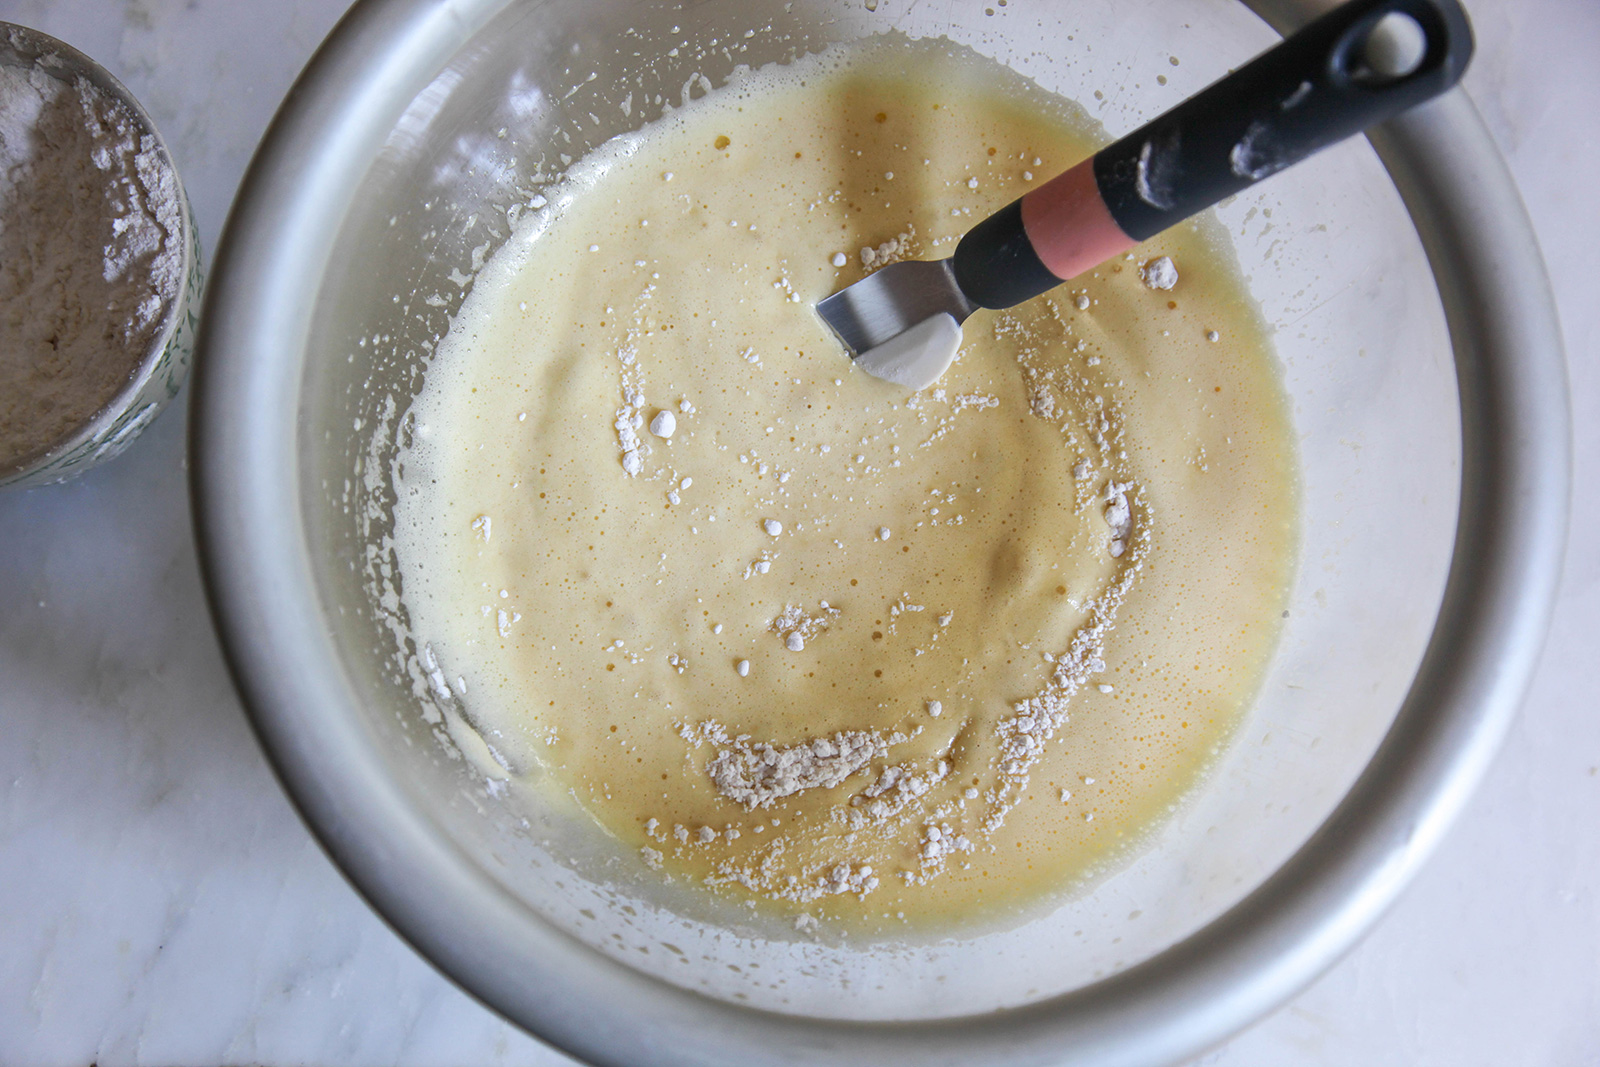 Folding in flour mix to make cake batter, for baking strawberry cake